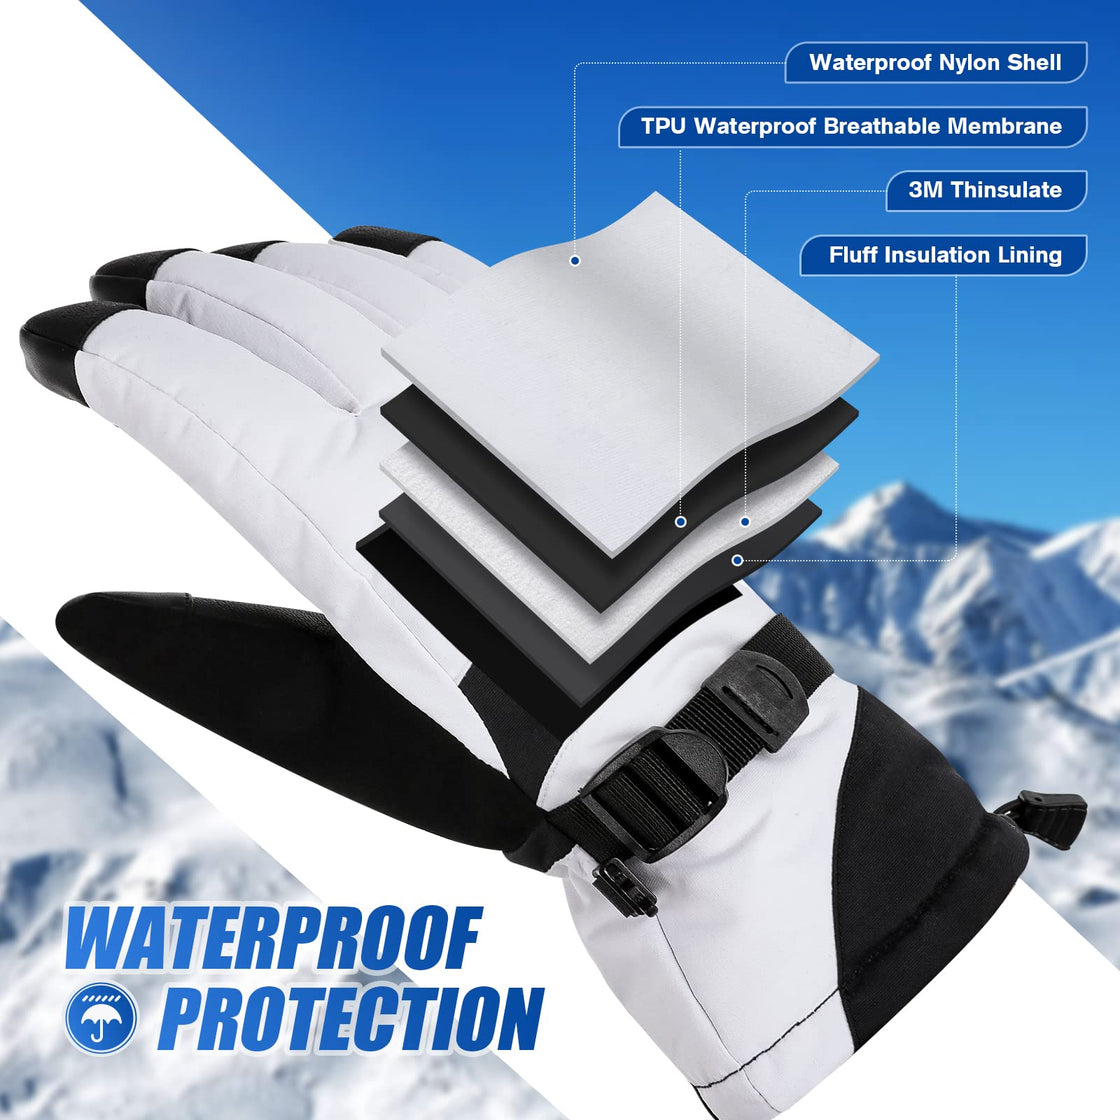 Brace Master Waterproof Ski Gloves (White)